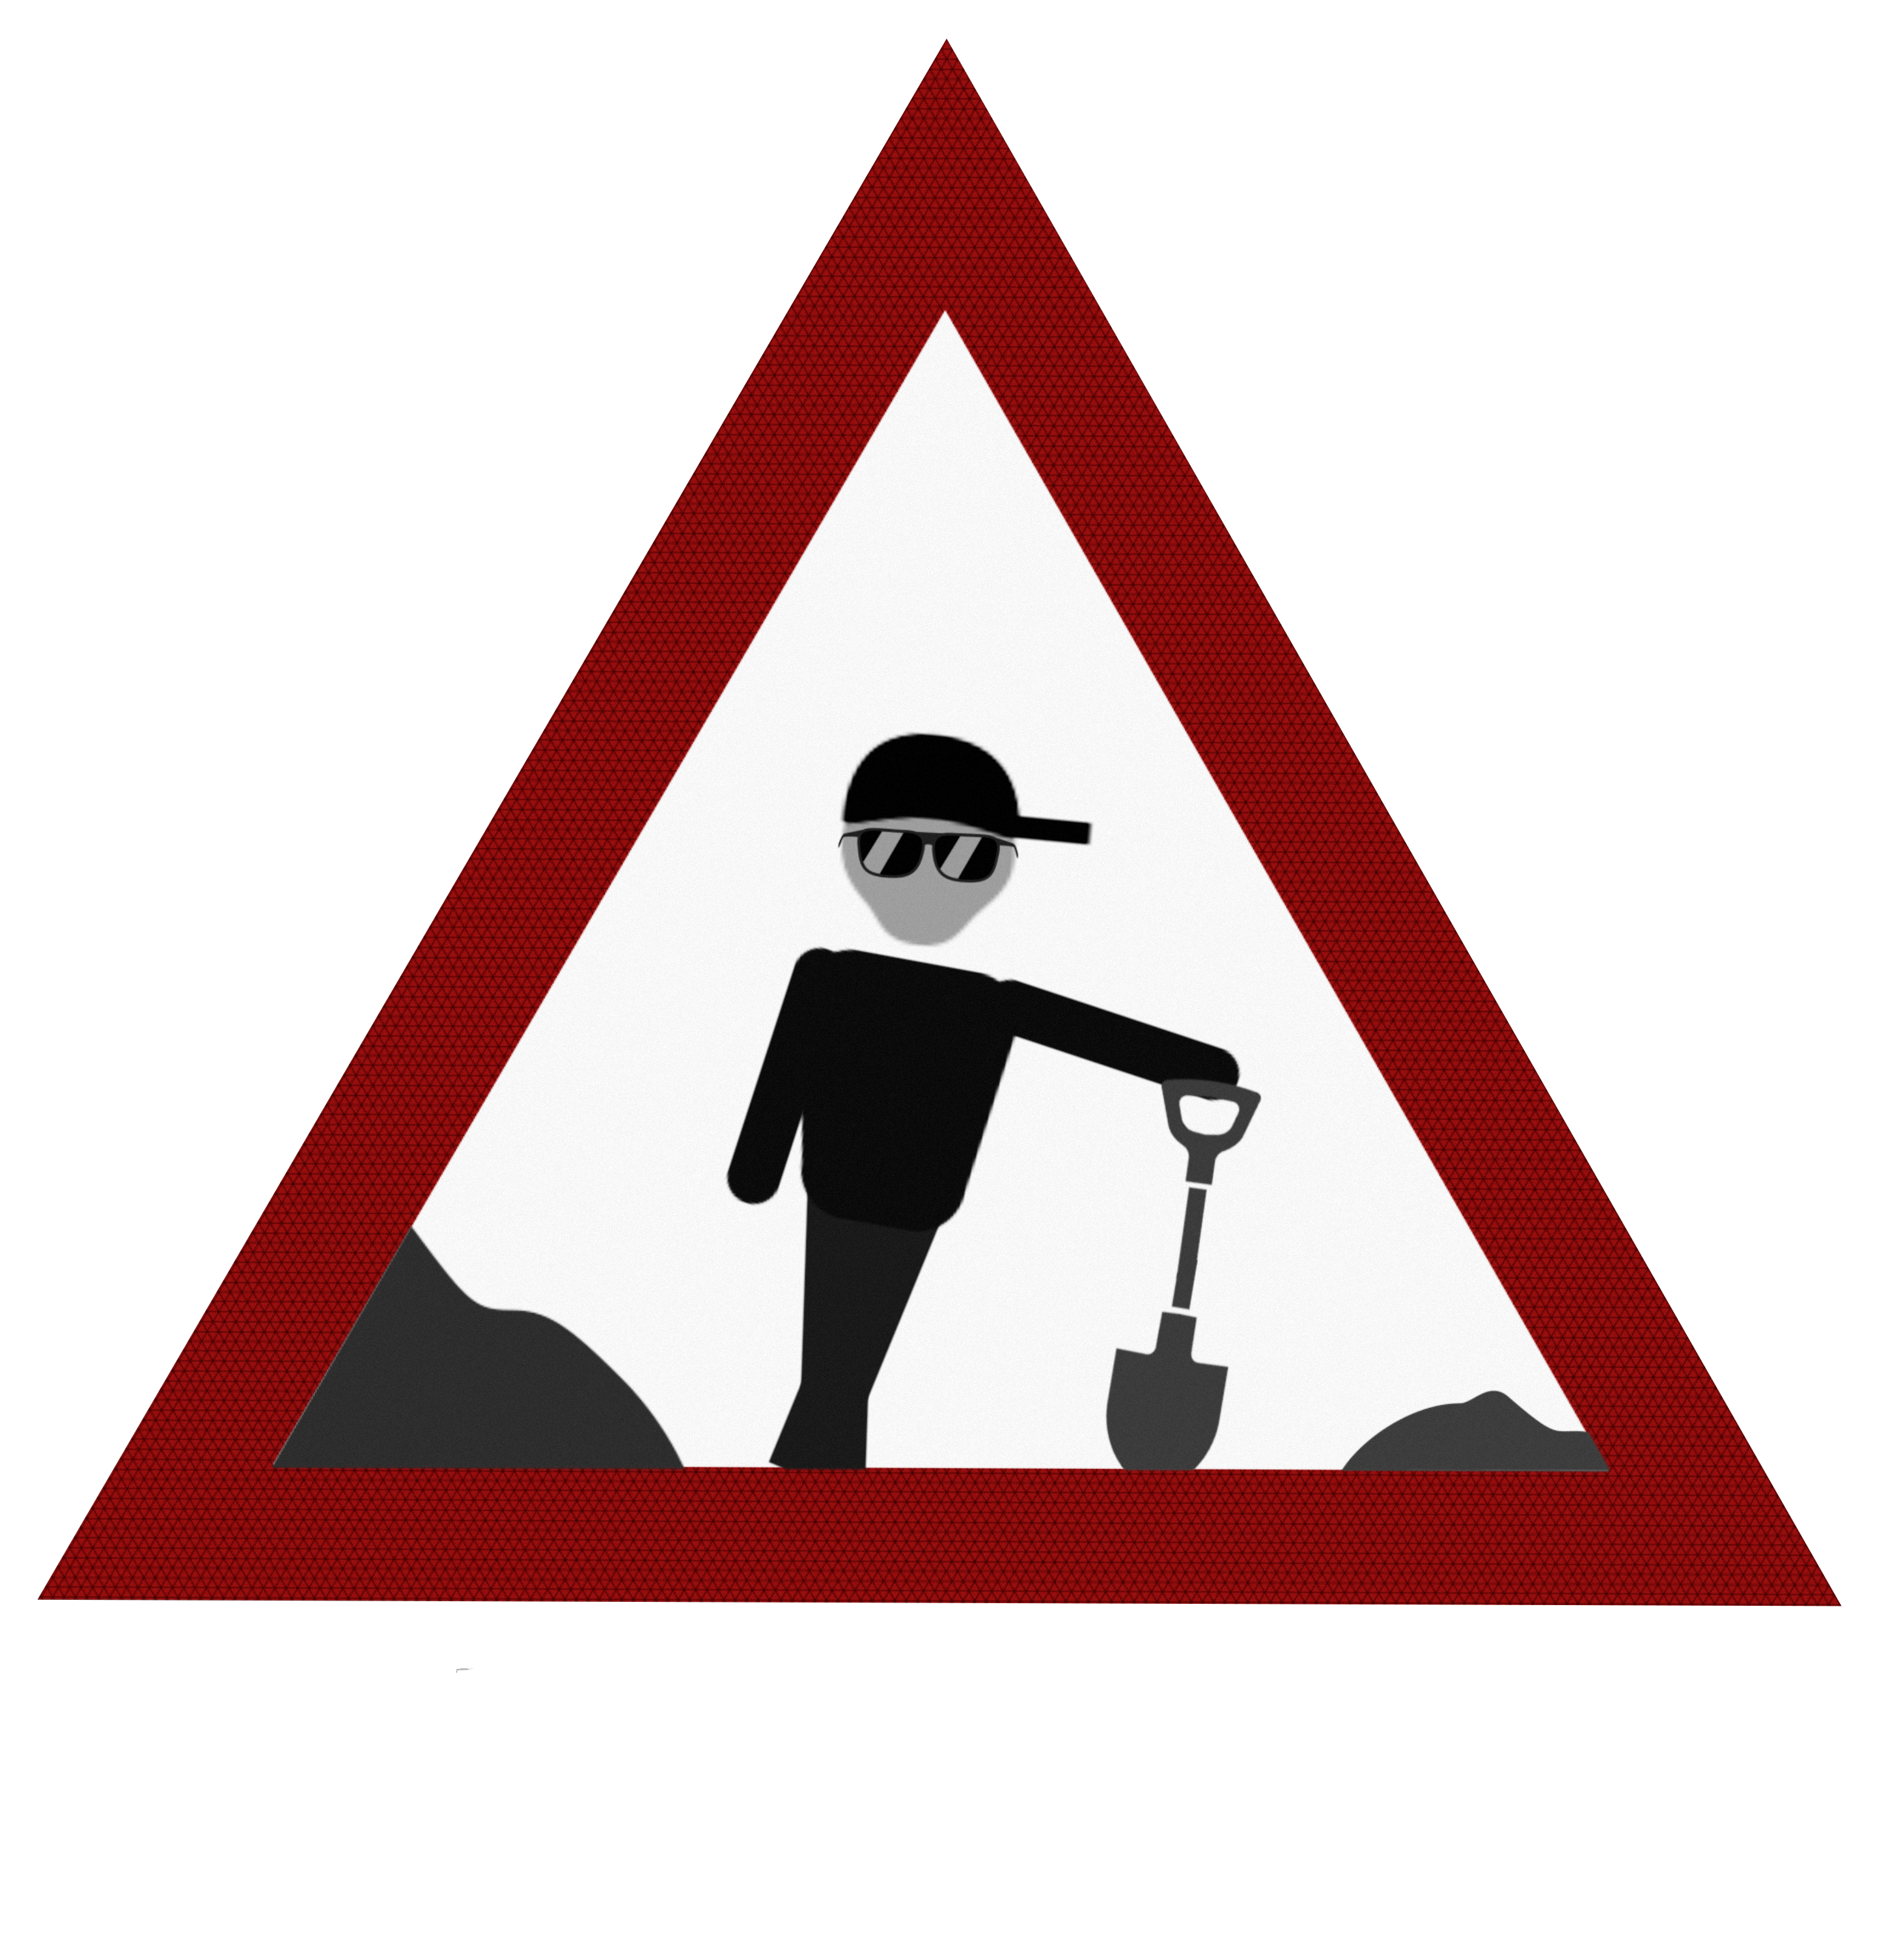 ONEMANSHOW KAZMA V PRÁCI (2018-2020)